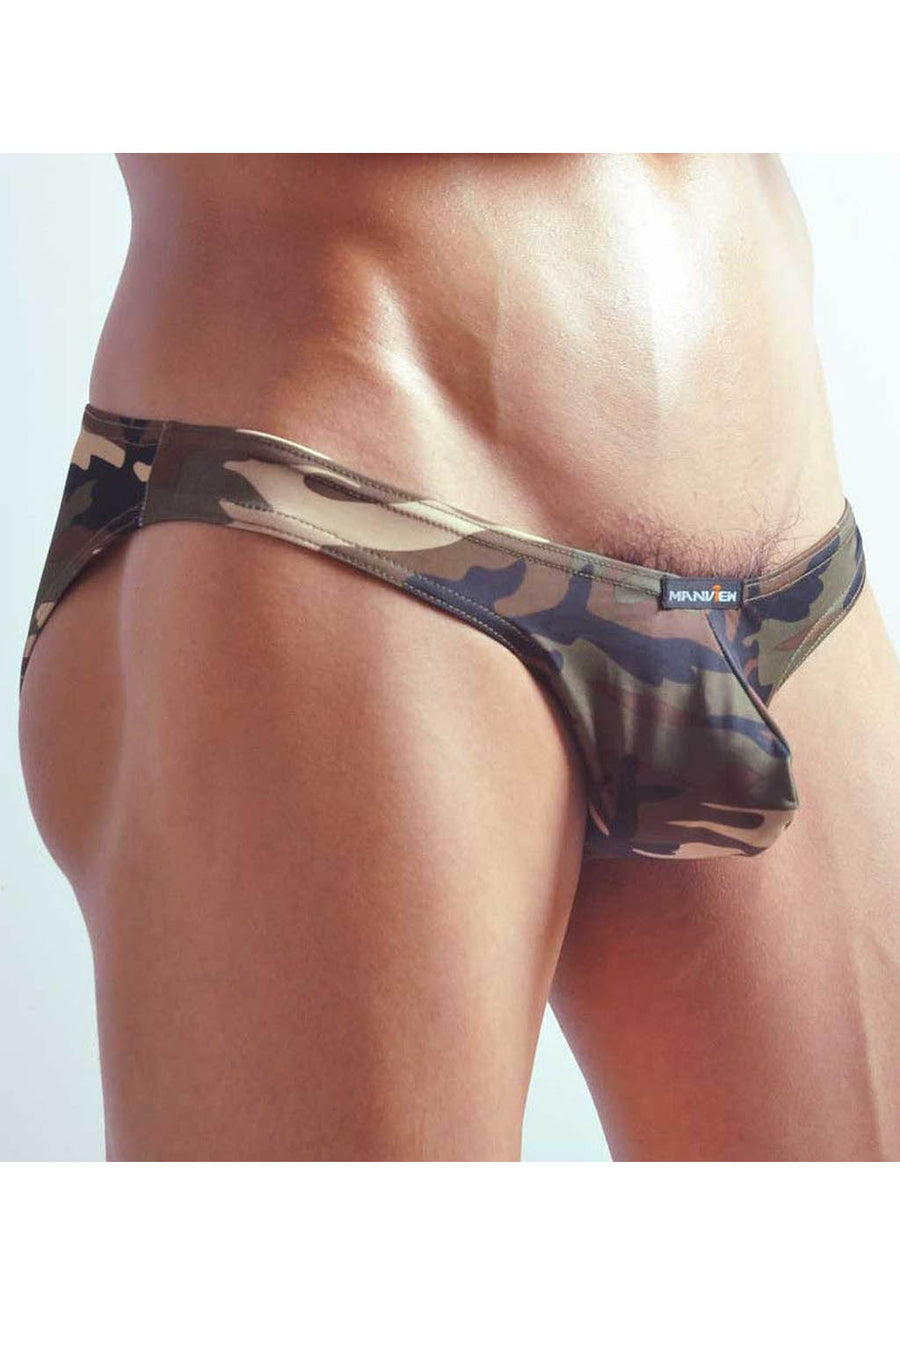 Manview Camouflage Pouch Bikini Lowrise Underwear